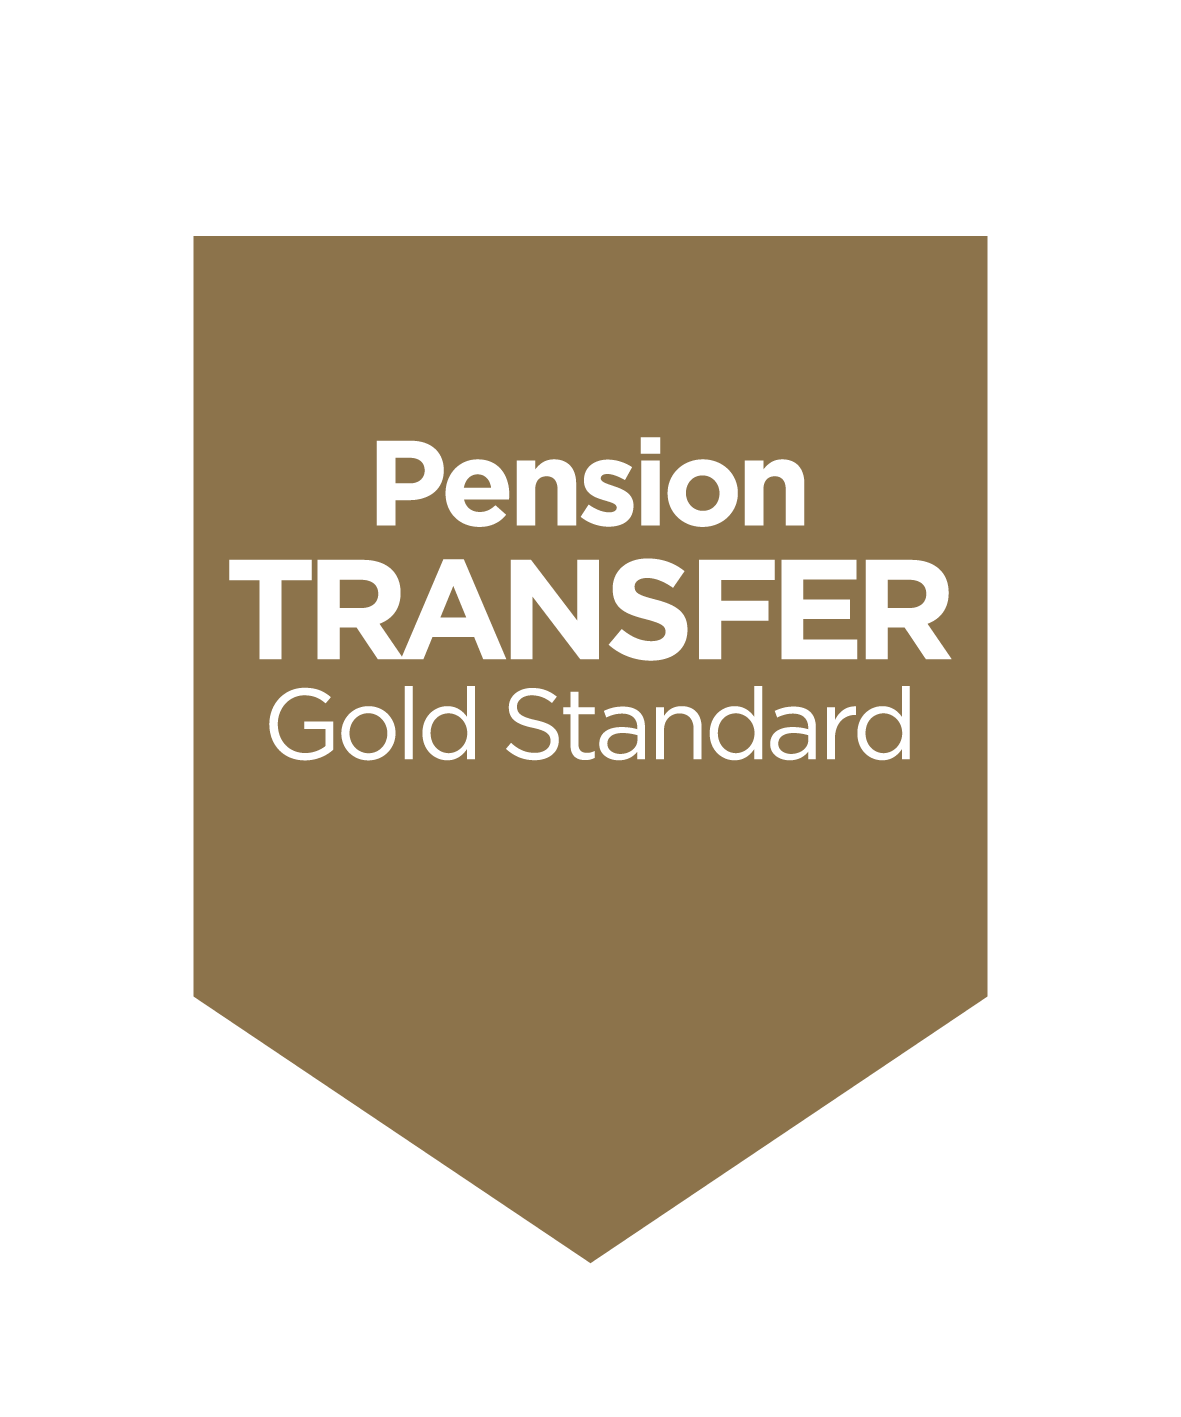 Pension Transfer Gold Standard Specialist